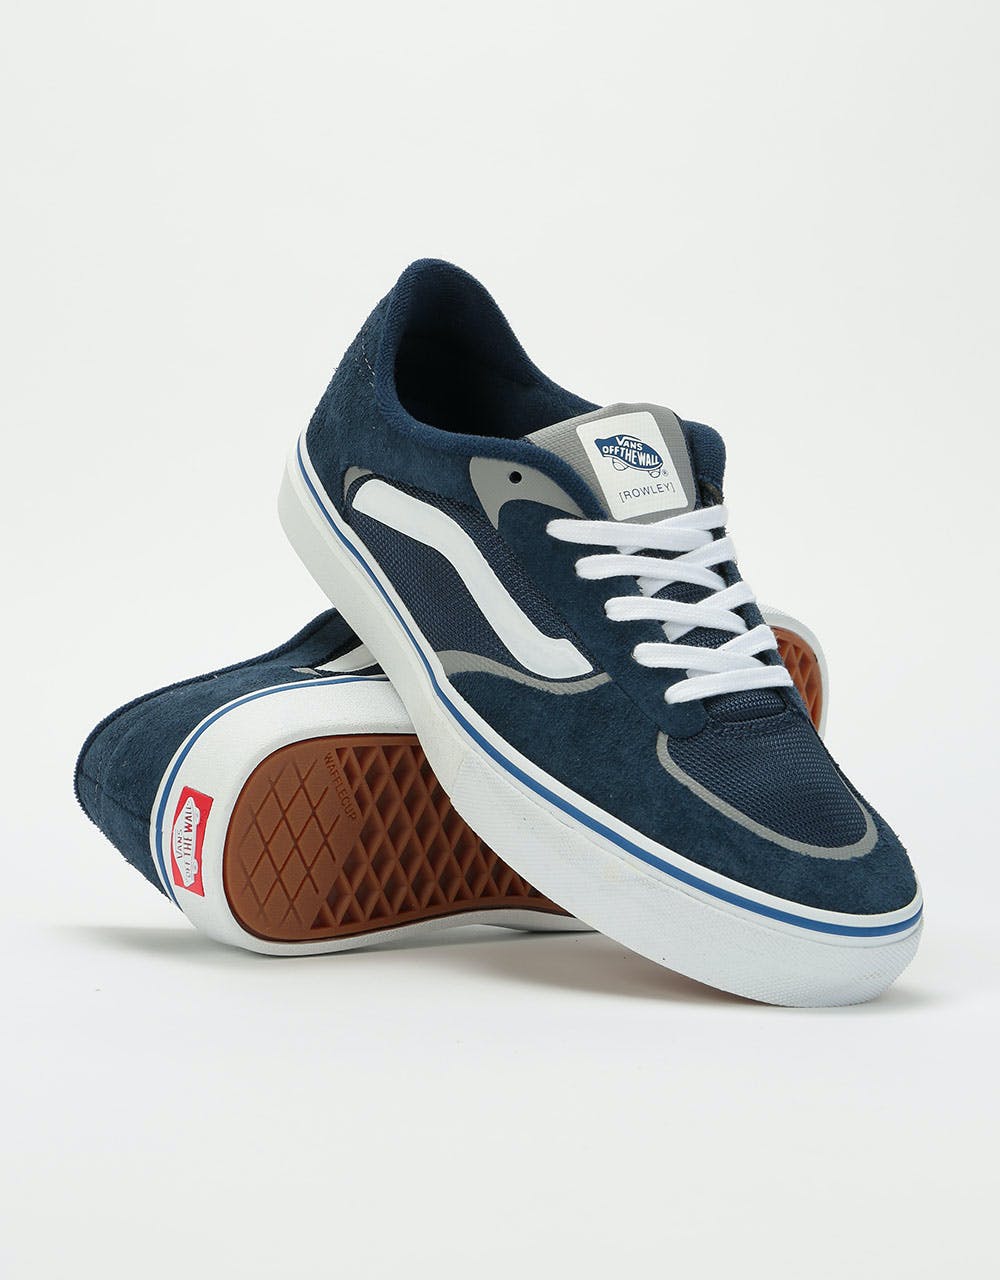 Vans Rowley Rapidweld Pro Skate Shoes - Navy/White